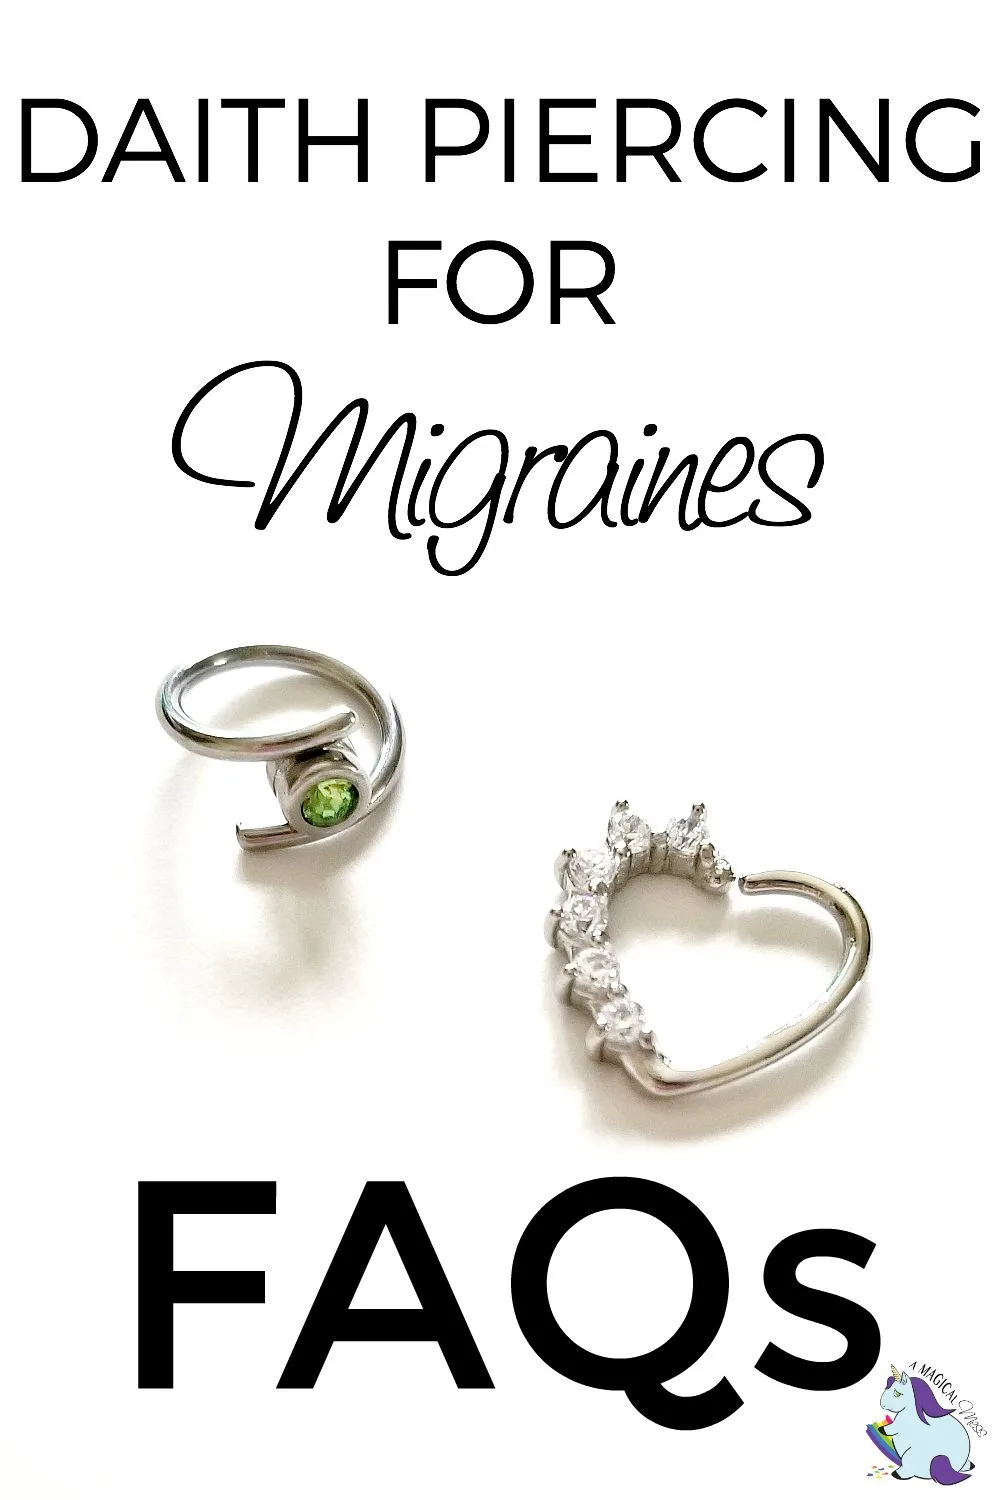 Daith Piercings for Migraines - FAQs #Daith #Migraines